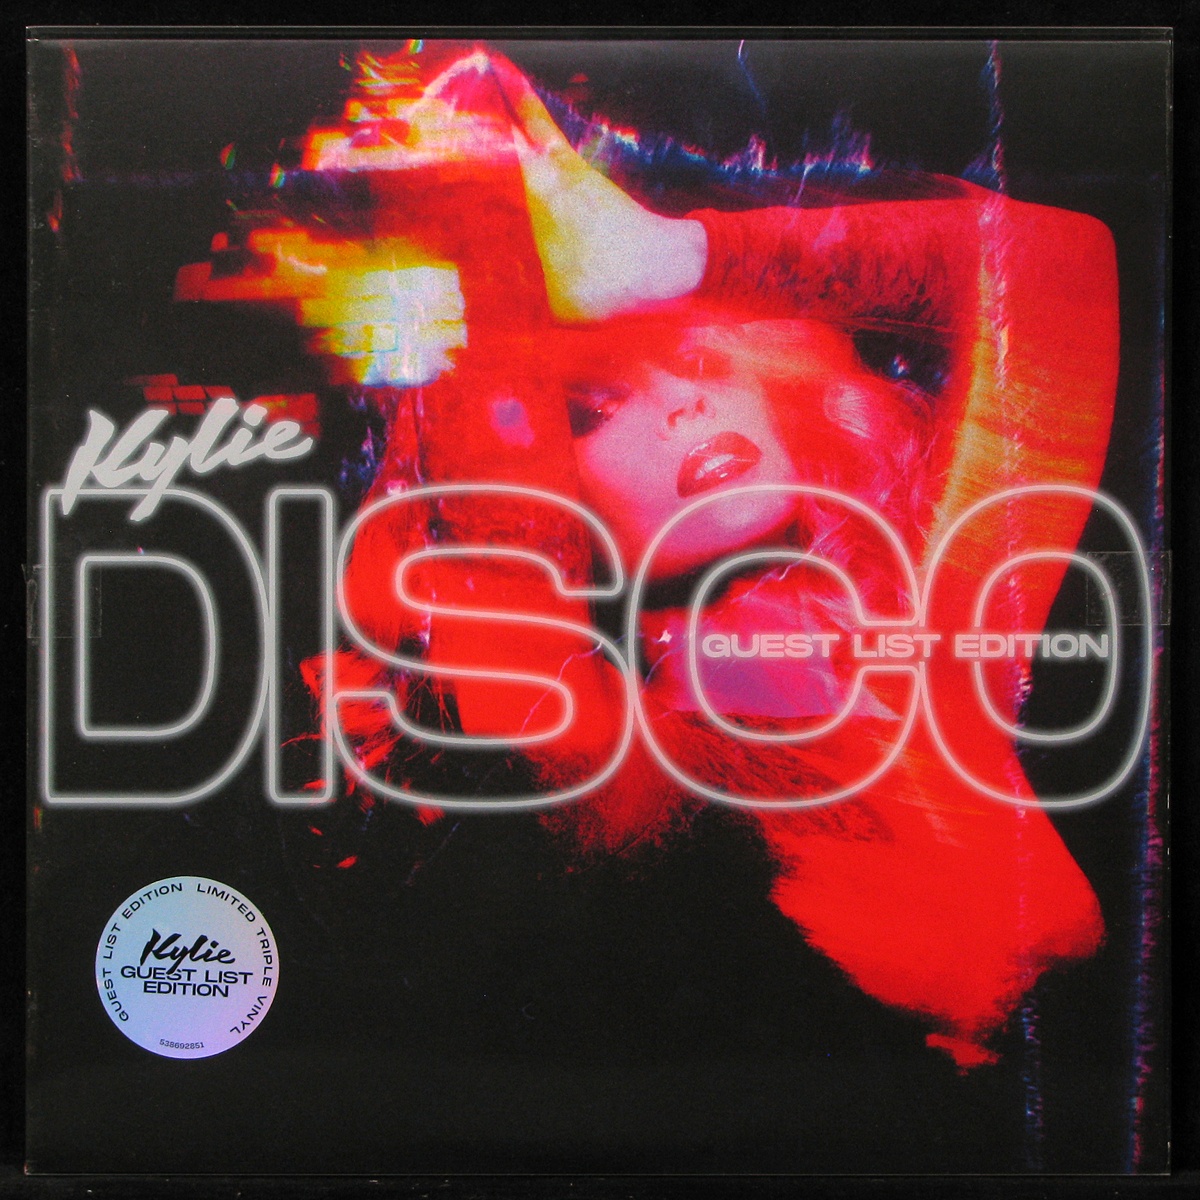 Minogue kylie disco. Kylie Minogue - Disco (Guest list Edition) 3 LP'S. Kylie - Disco (Guest list Edition) LP 1. Kylie Minogue Step back in time LP.